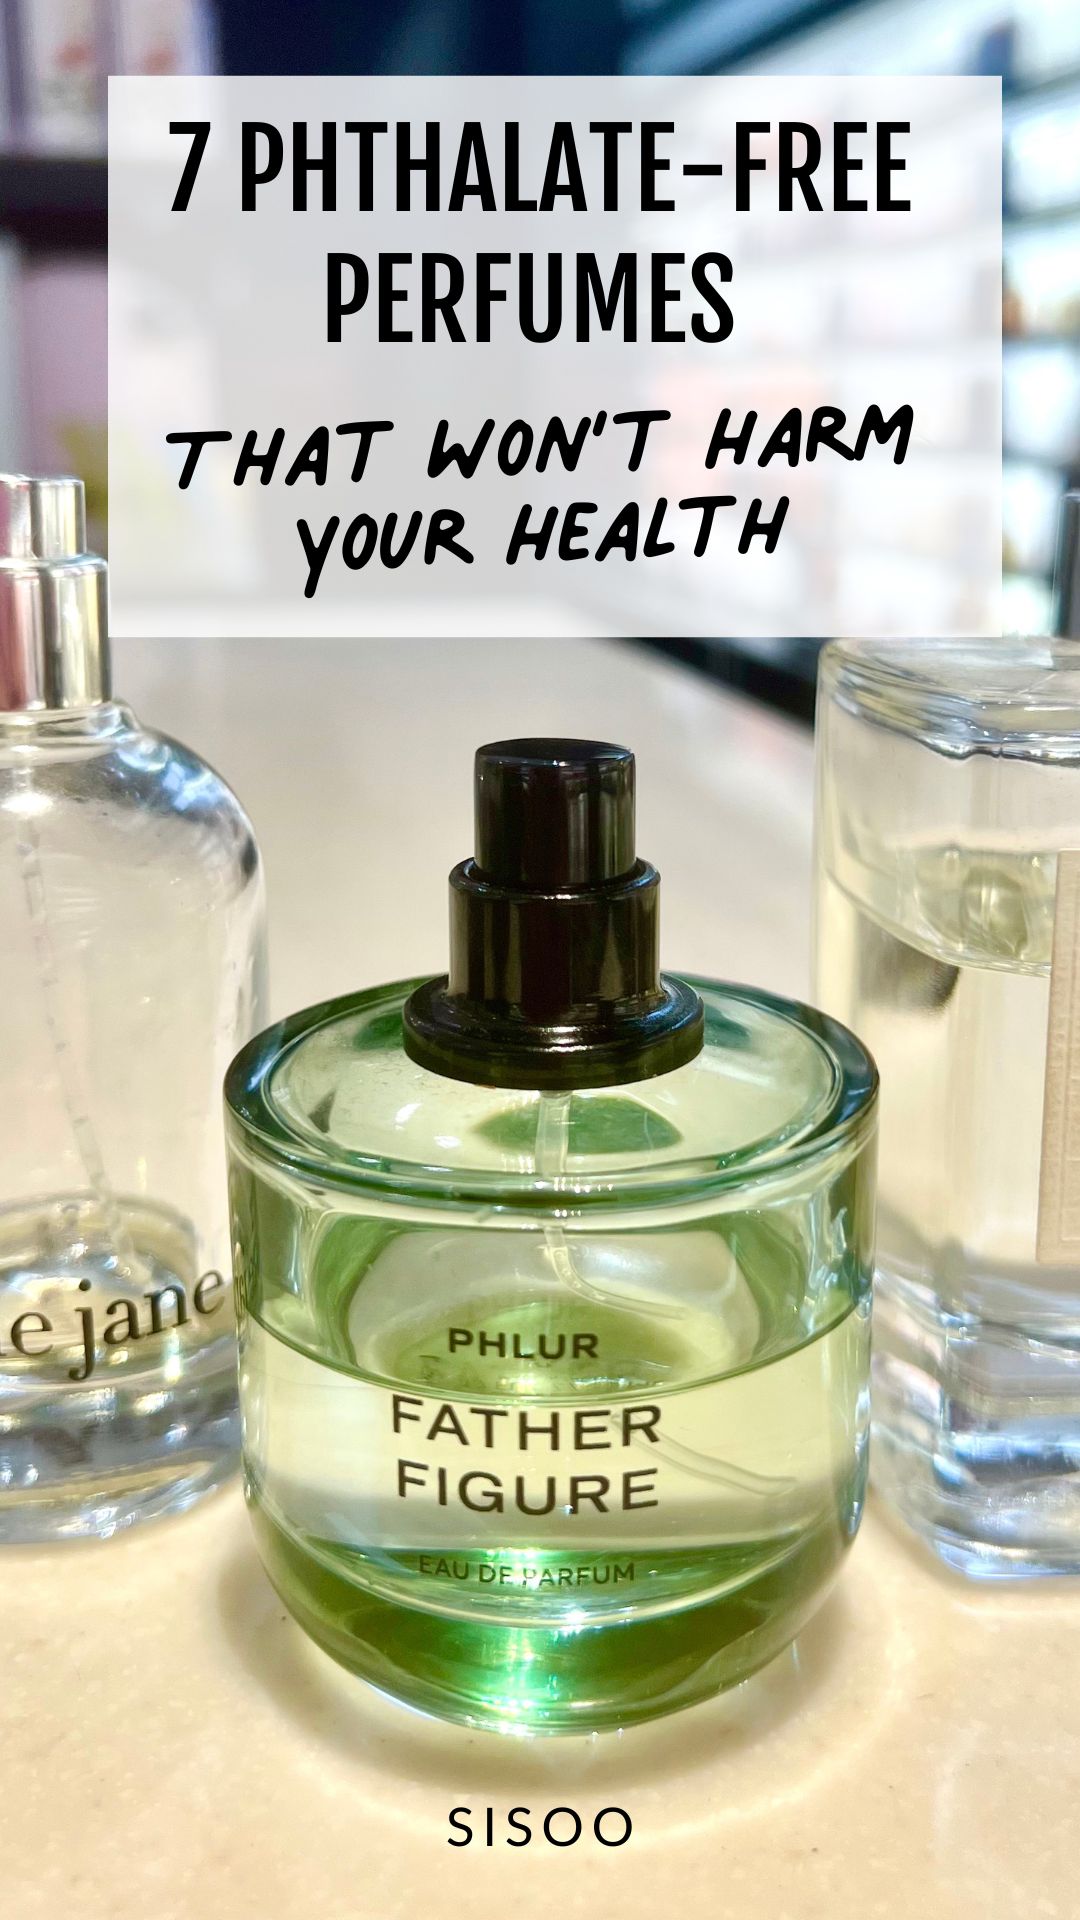 Phthalate-Free perfumes